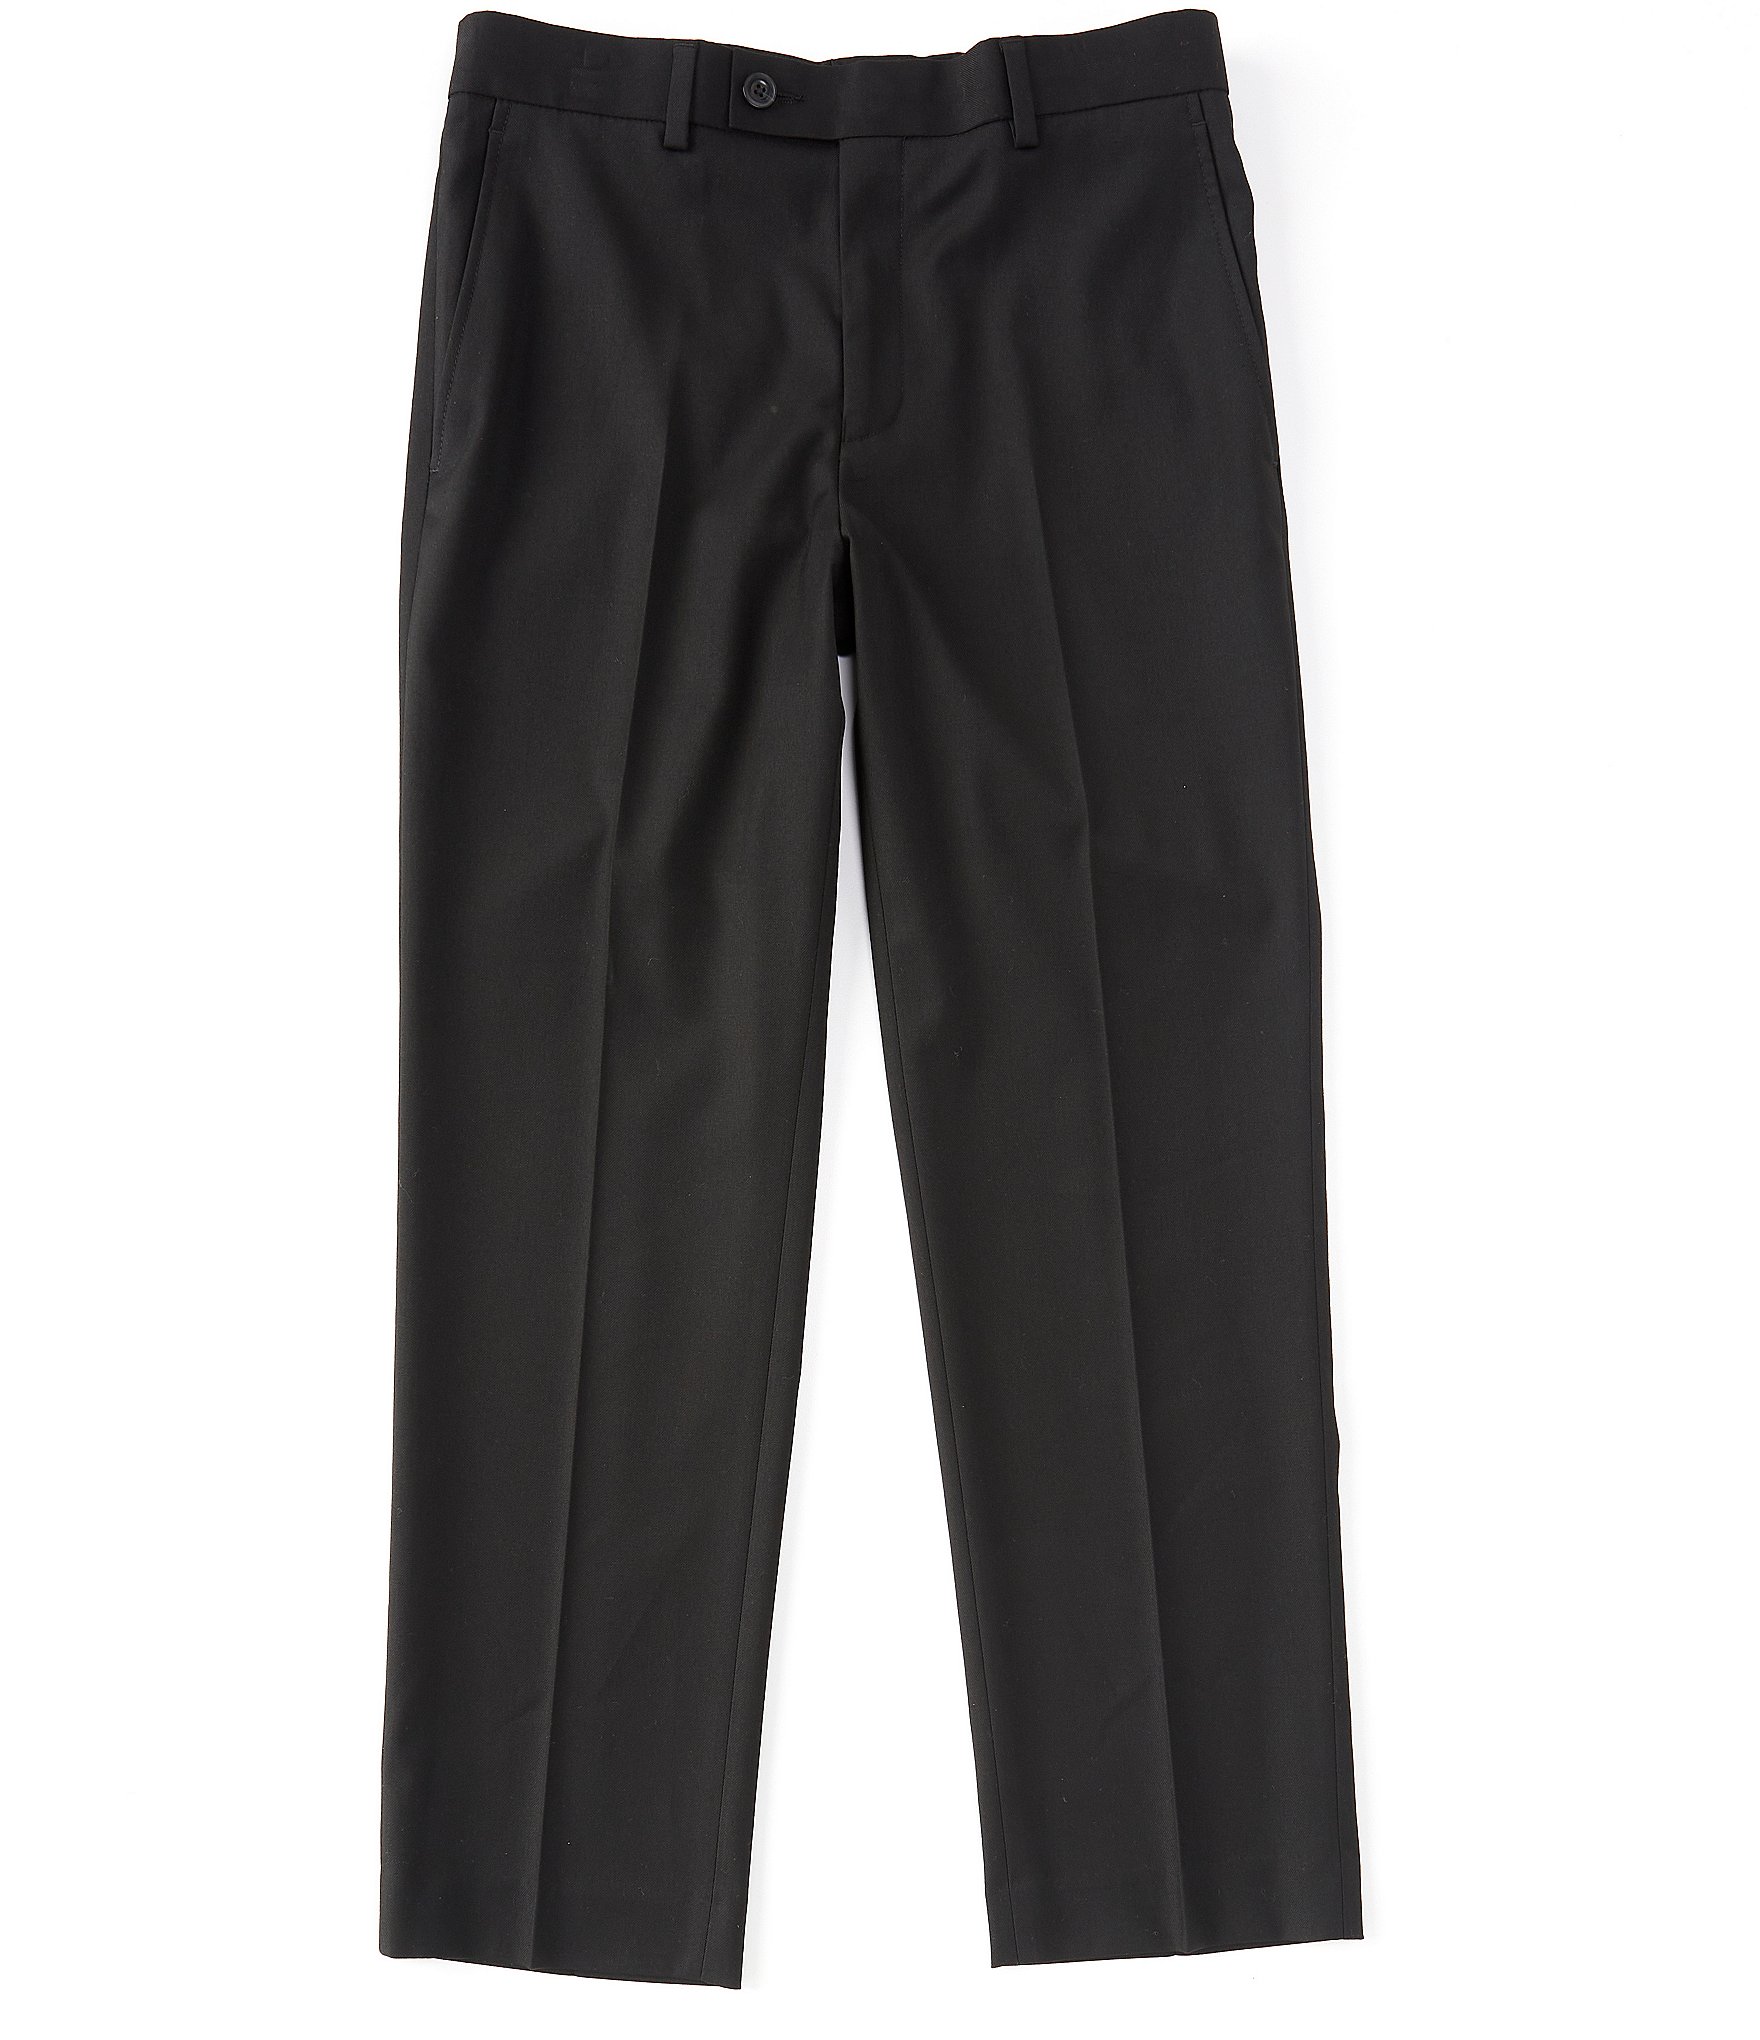 Buy D V Enterprise School Uniform Boys Grey Full Pant with Elastic Regular  Fit 22 at Amazonin